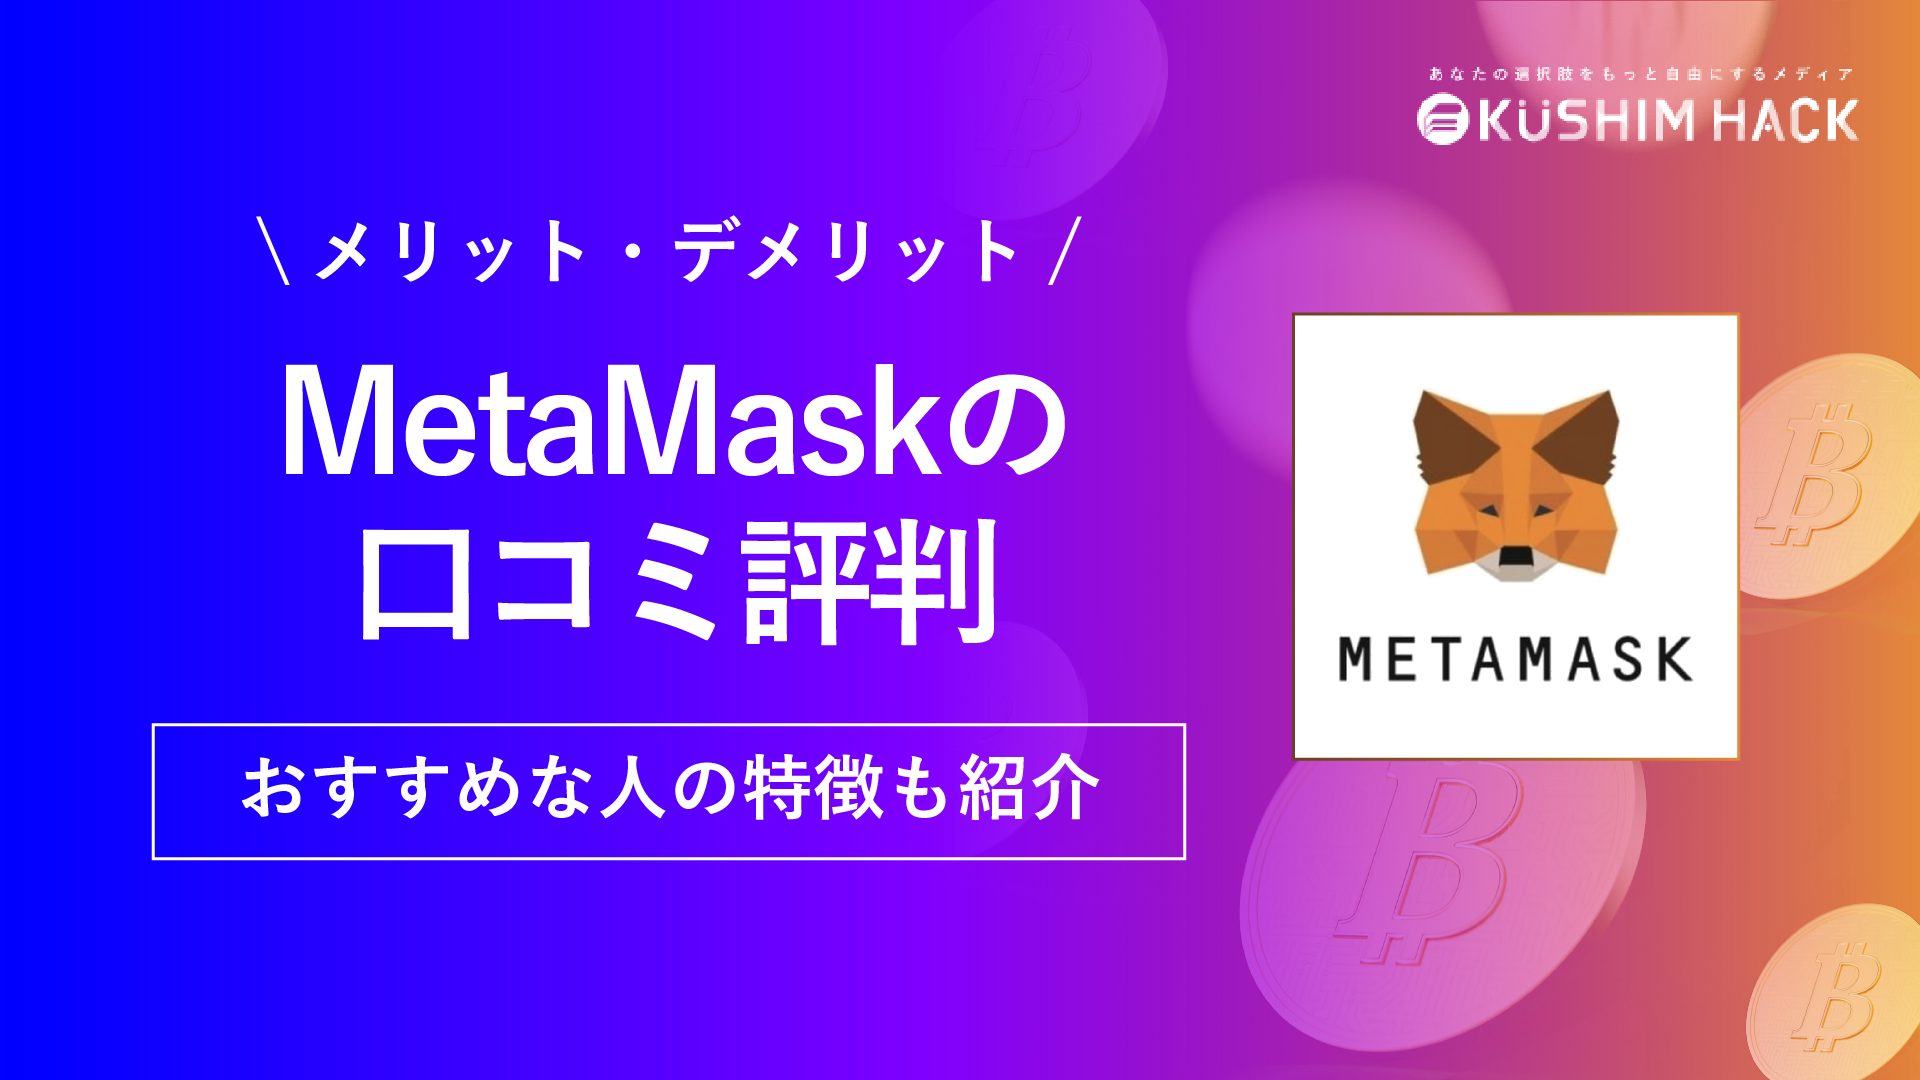 MetaMask(メタマスク）とは？特徴やメリット、登録方法まで解説